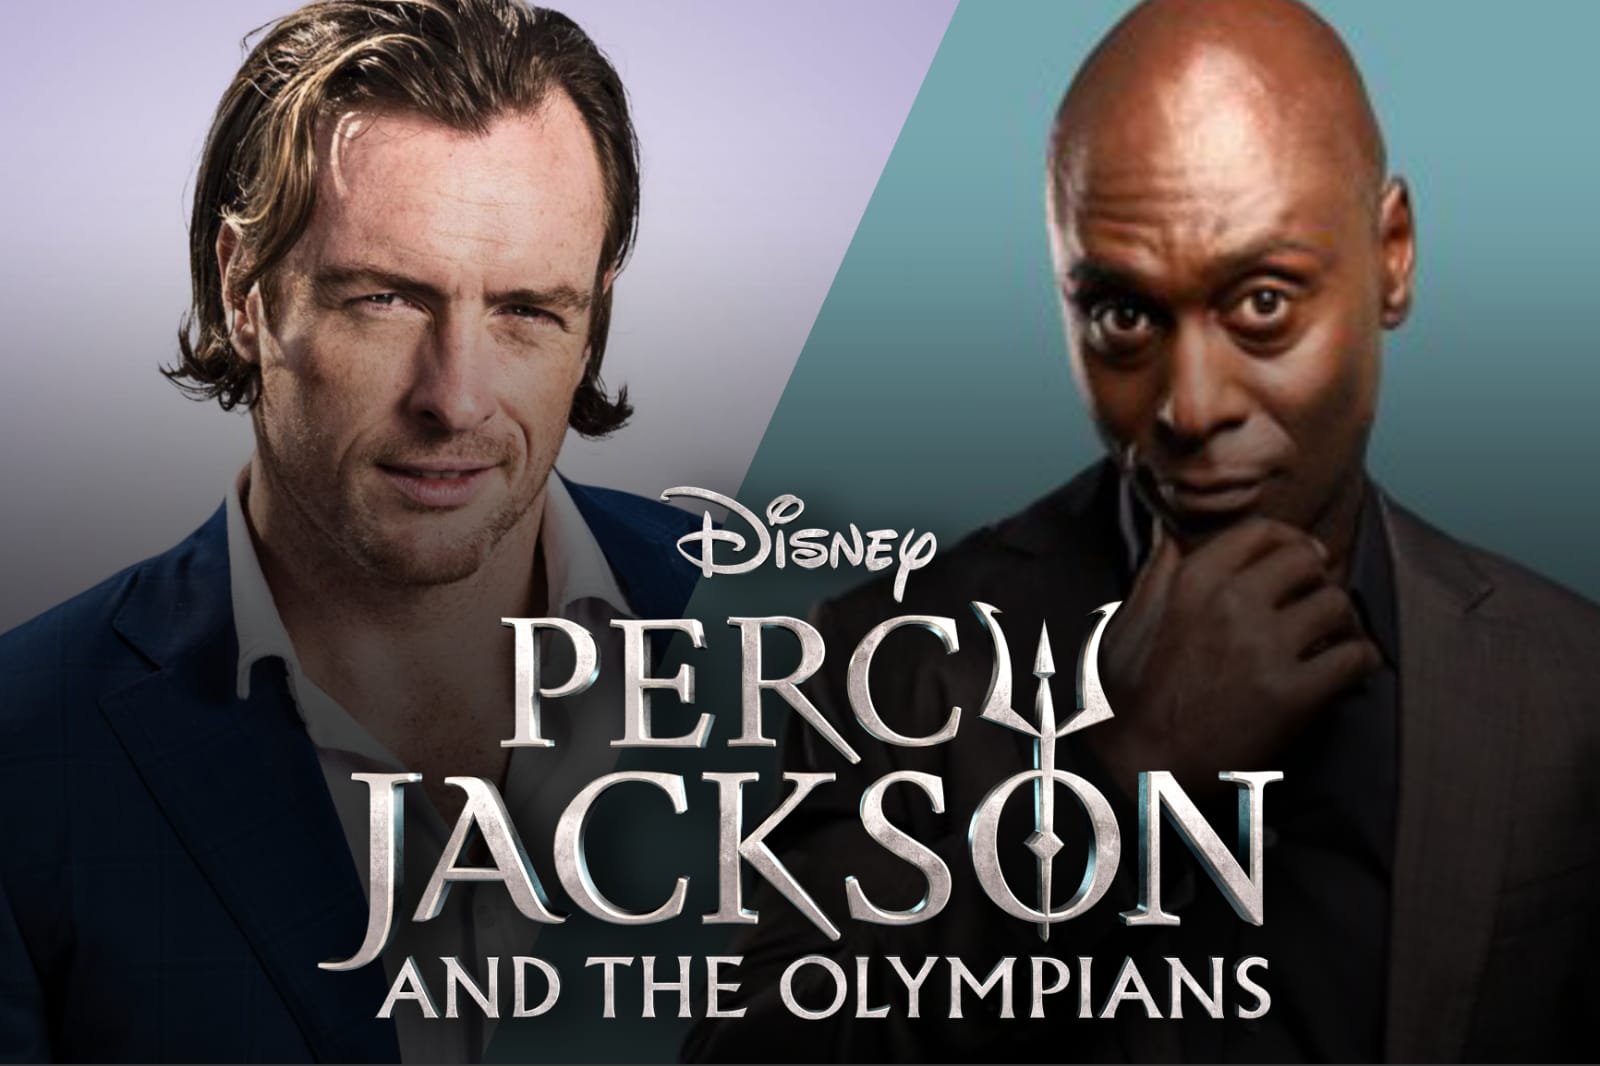 Lance Reddick, Actor Cast as Zeus in 'Percy Jackson' Series on